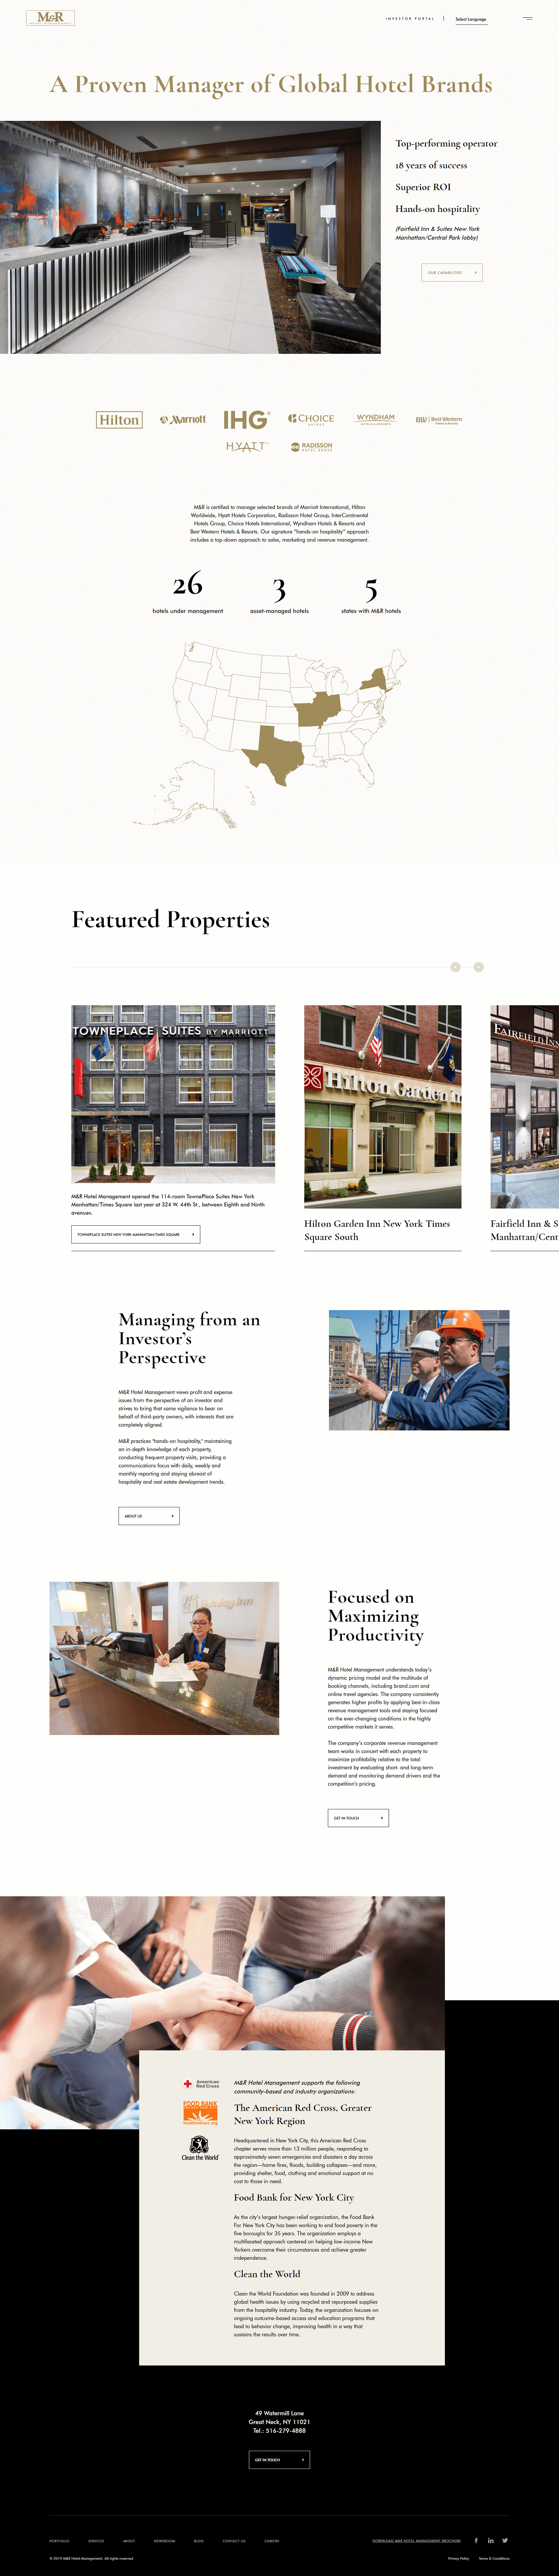 M&R Hotel Management Home Page Design & Development